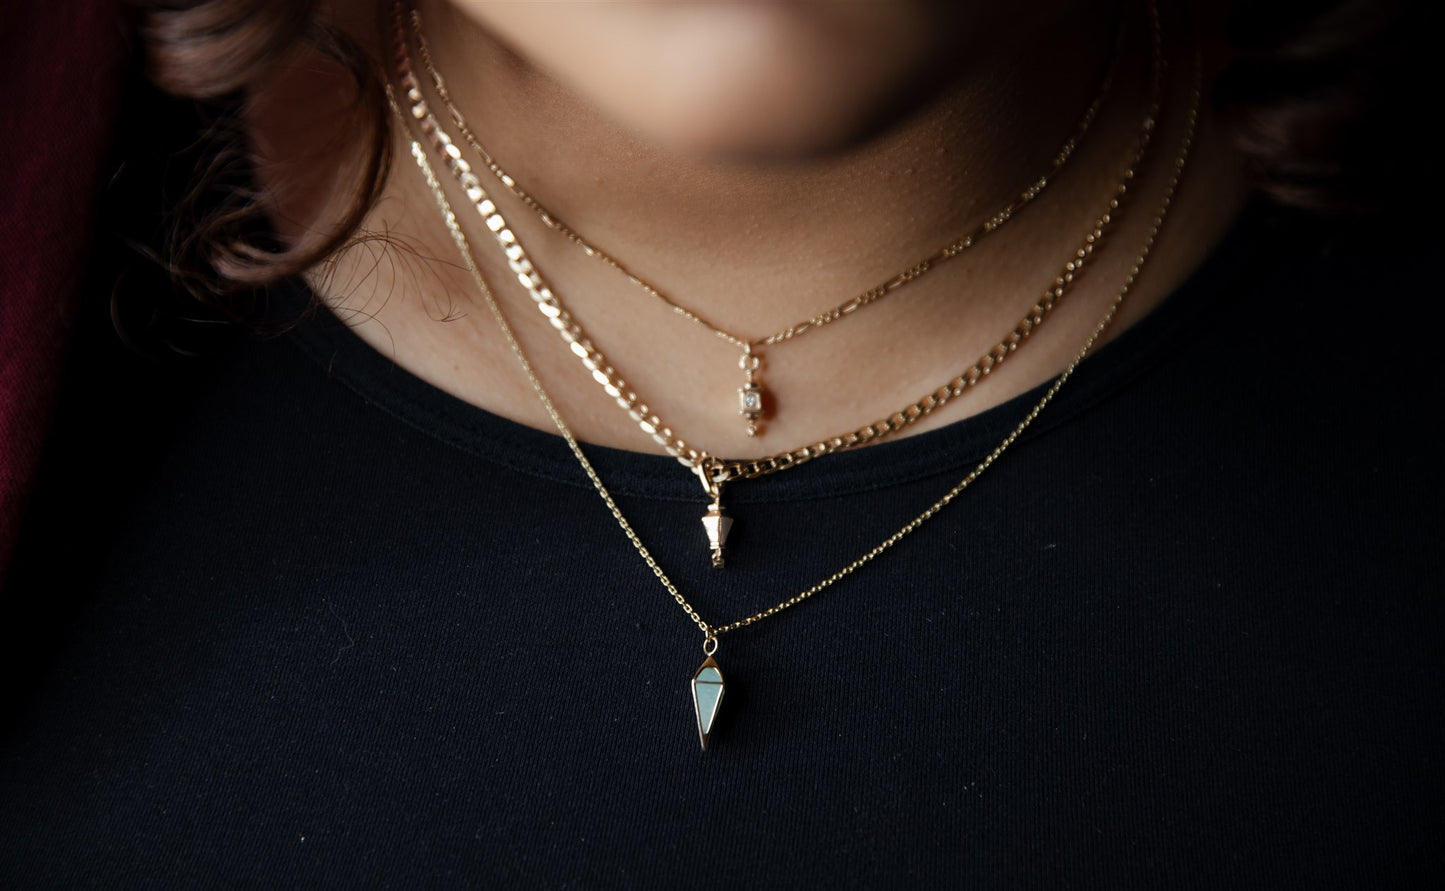 short pendulum necklace on a model